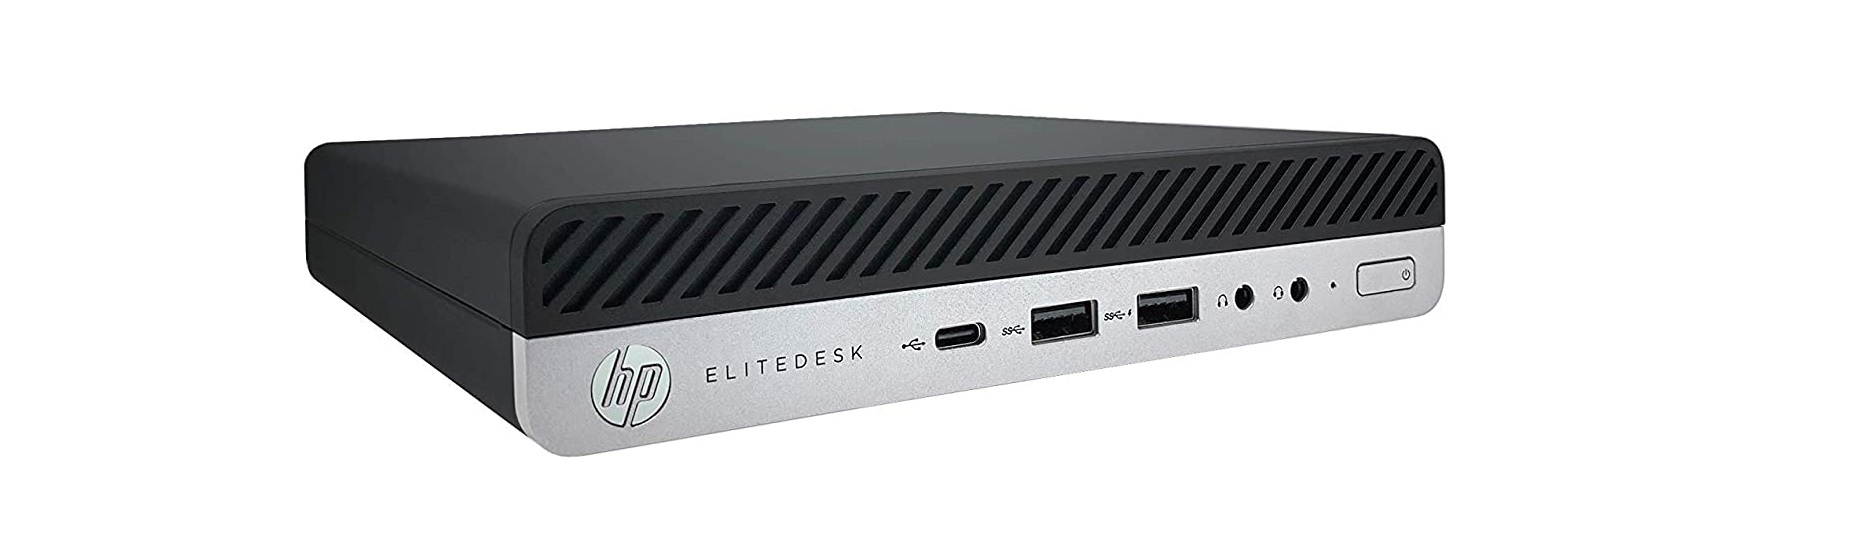 Analizamos el ordenador HP EliteDesk 800 G3 MINI